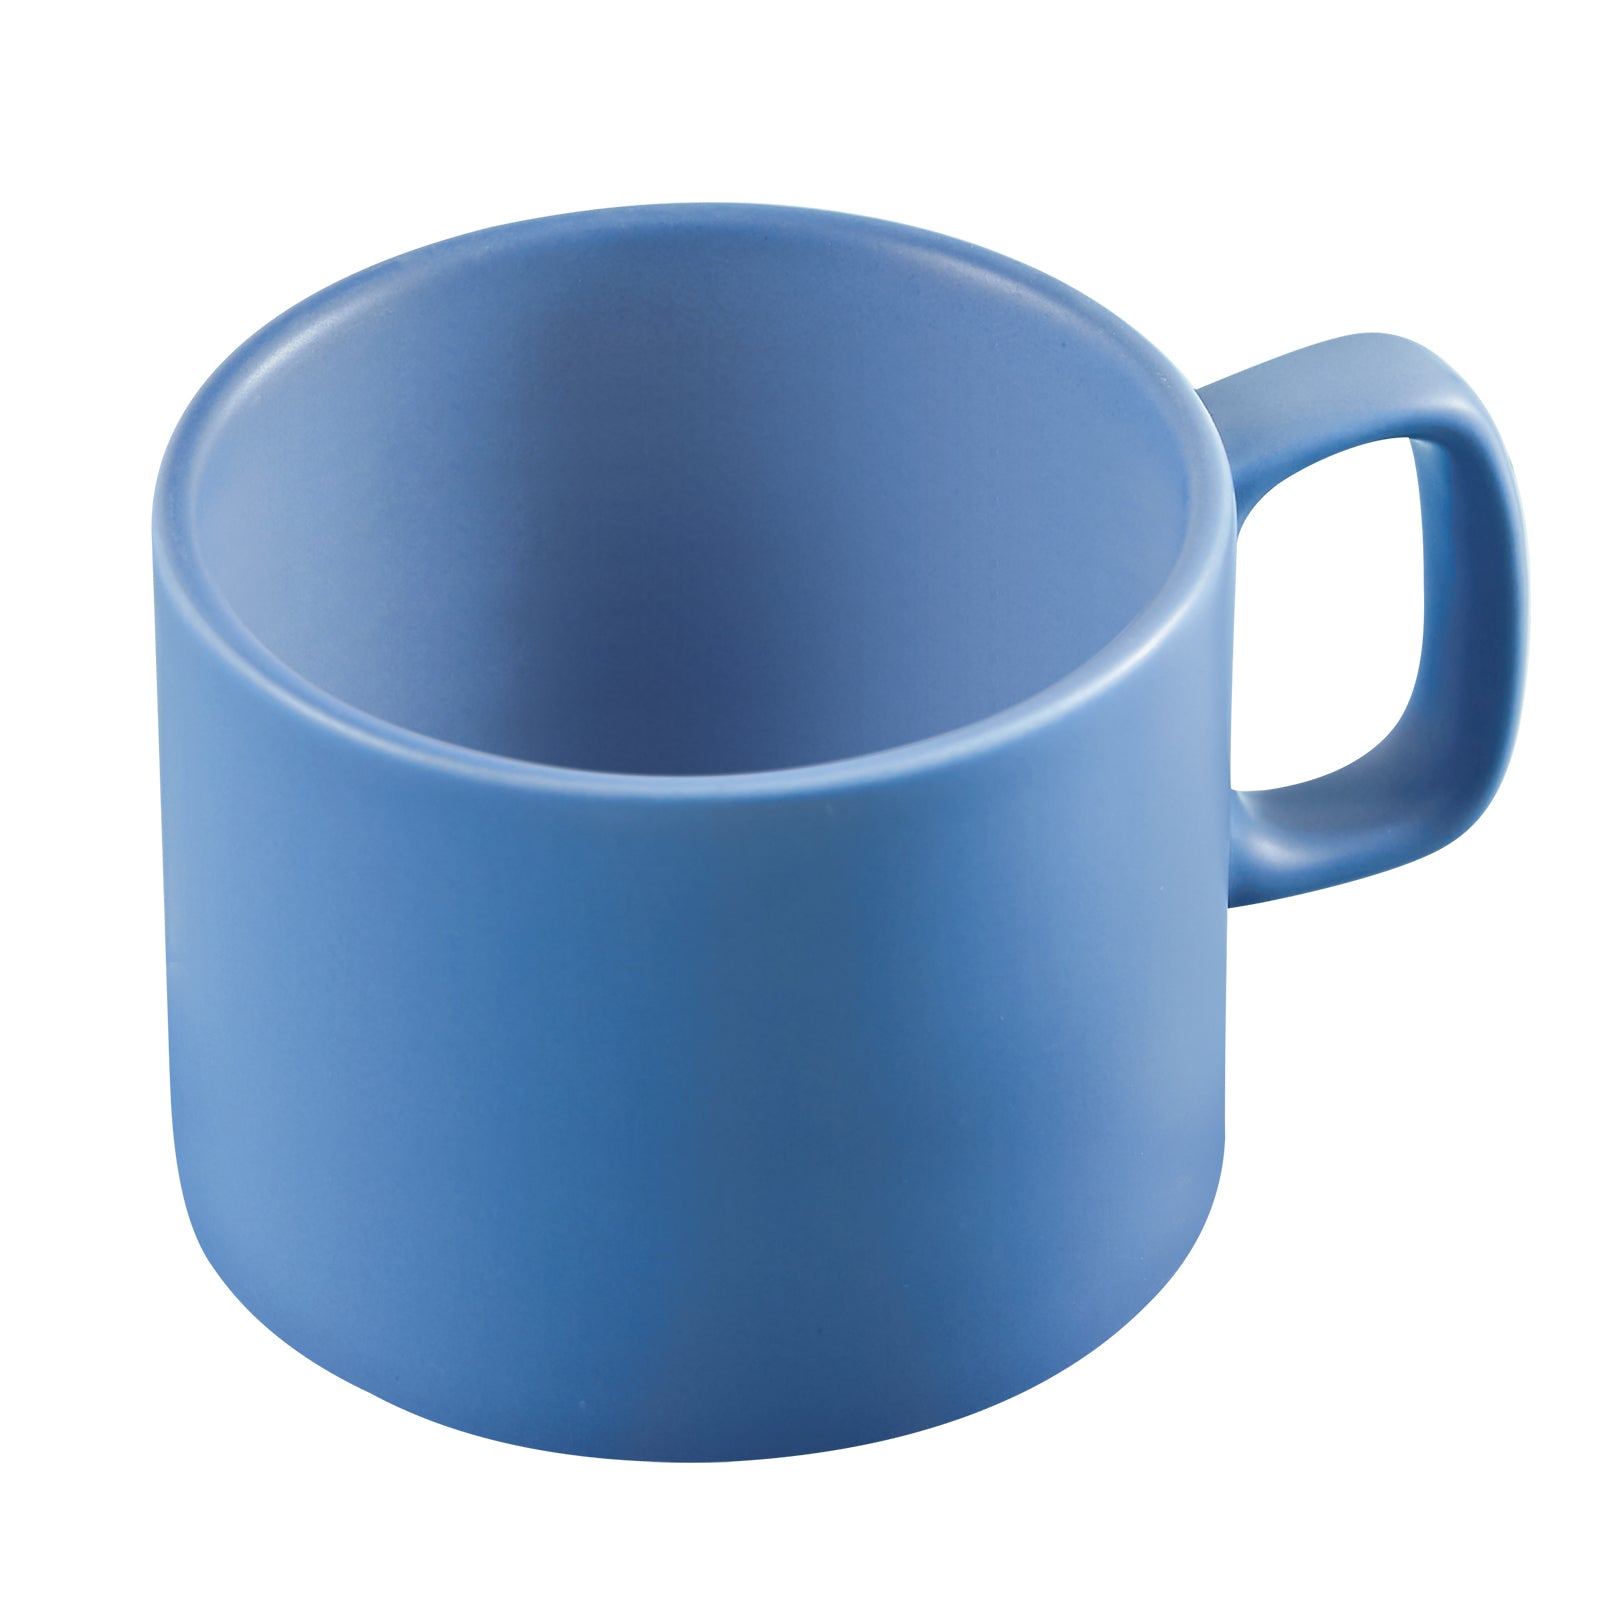 VOBAGA 11 oz Cup Coffee Mug with Flat-Bottom Warming Coffee Milk Tea for Office ( Light-blue)